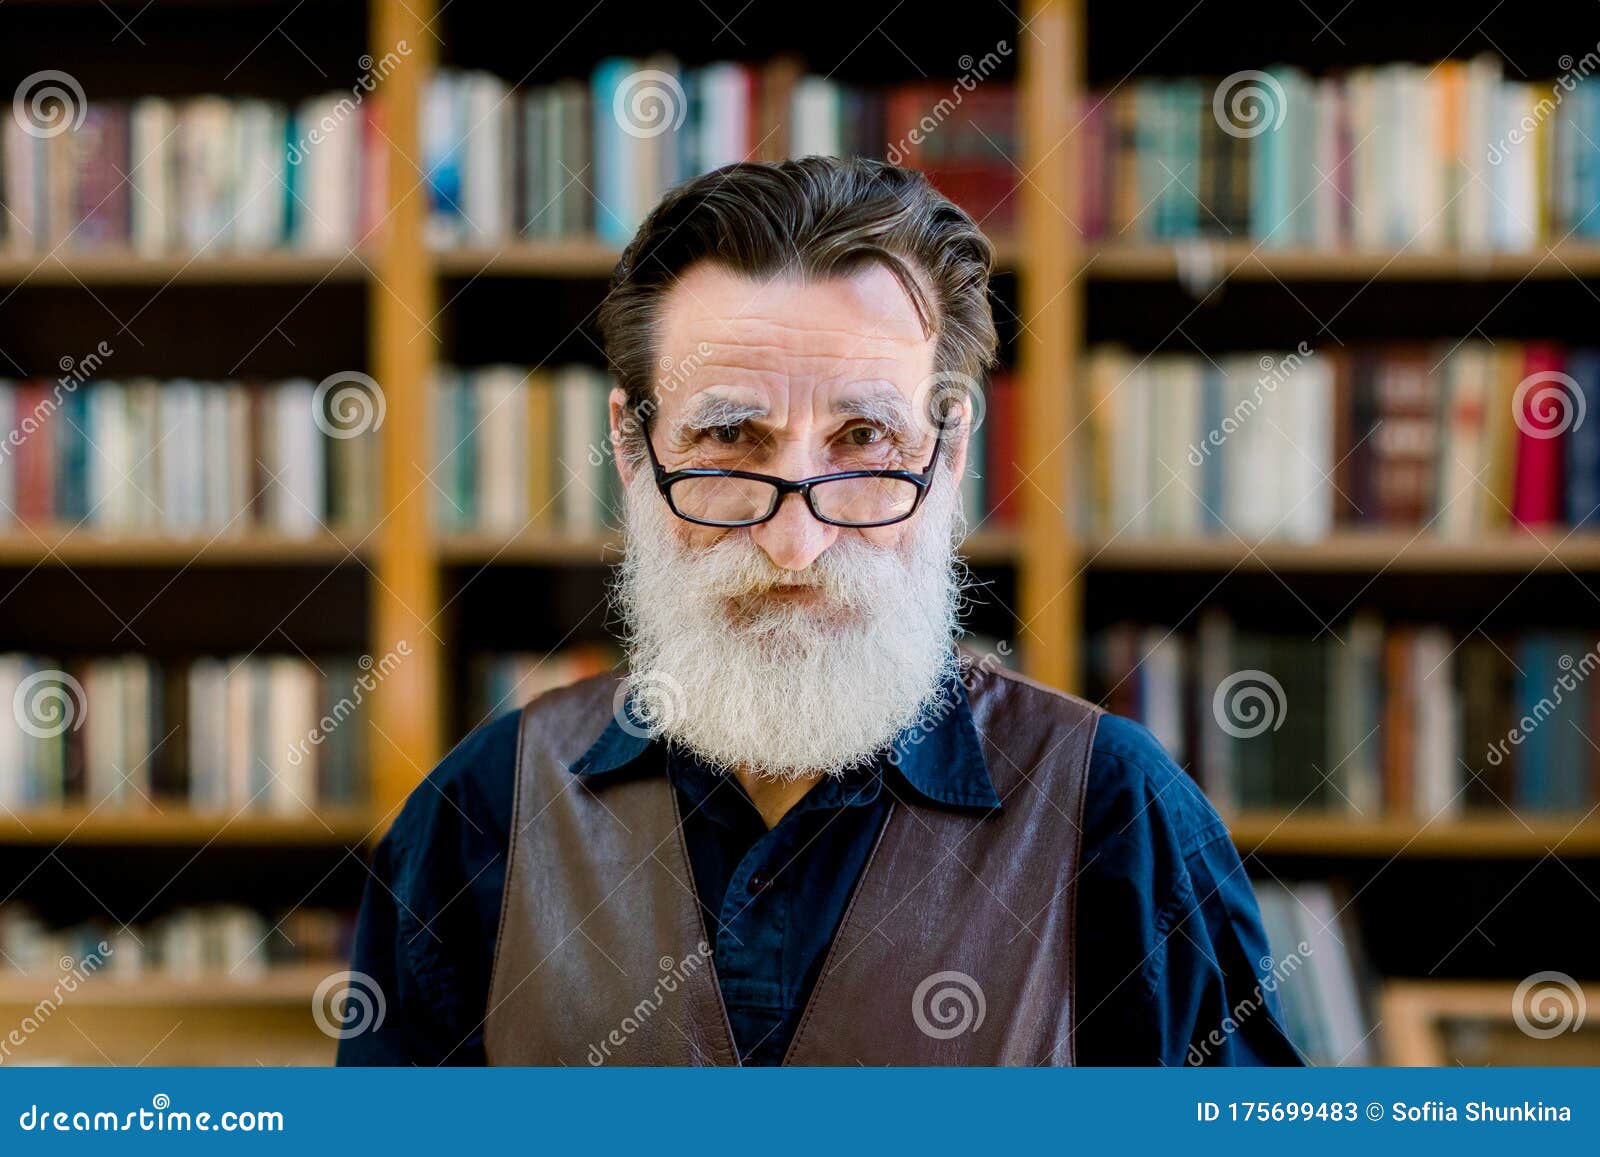 Close Up Portrait Of Senior Man With Beard And Eyeglasses